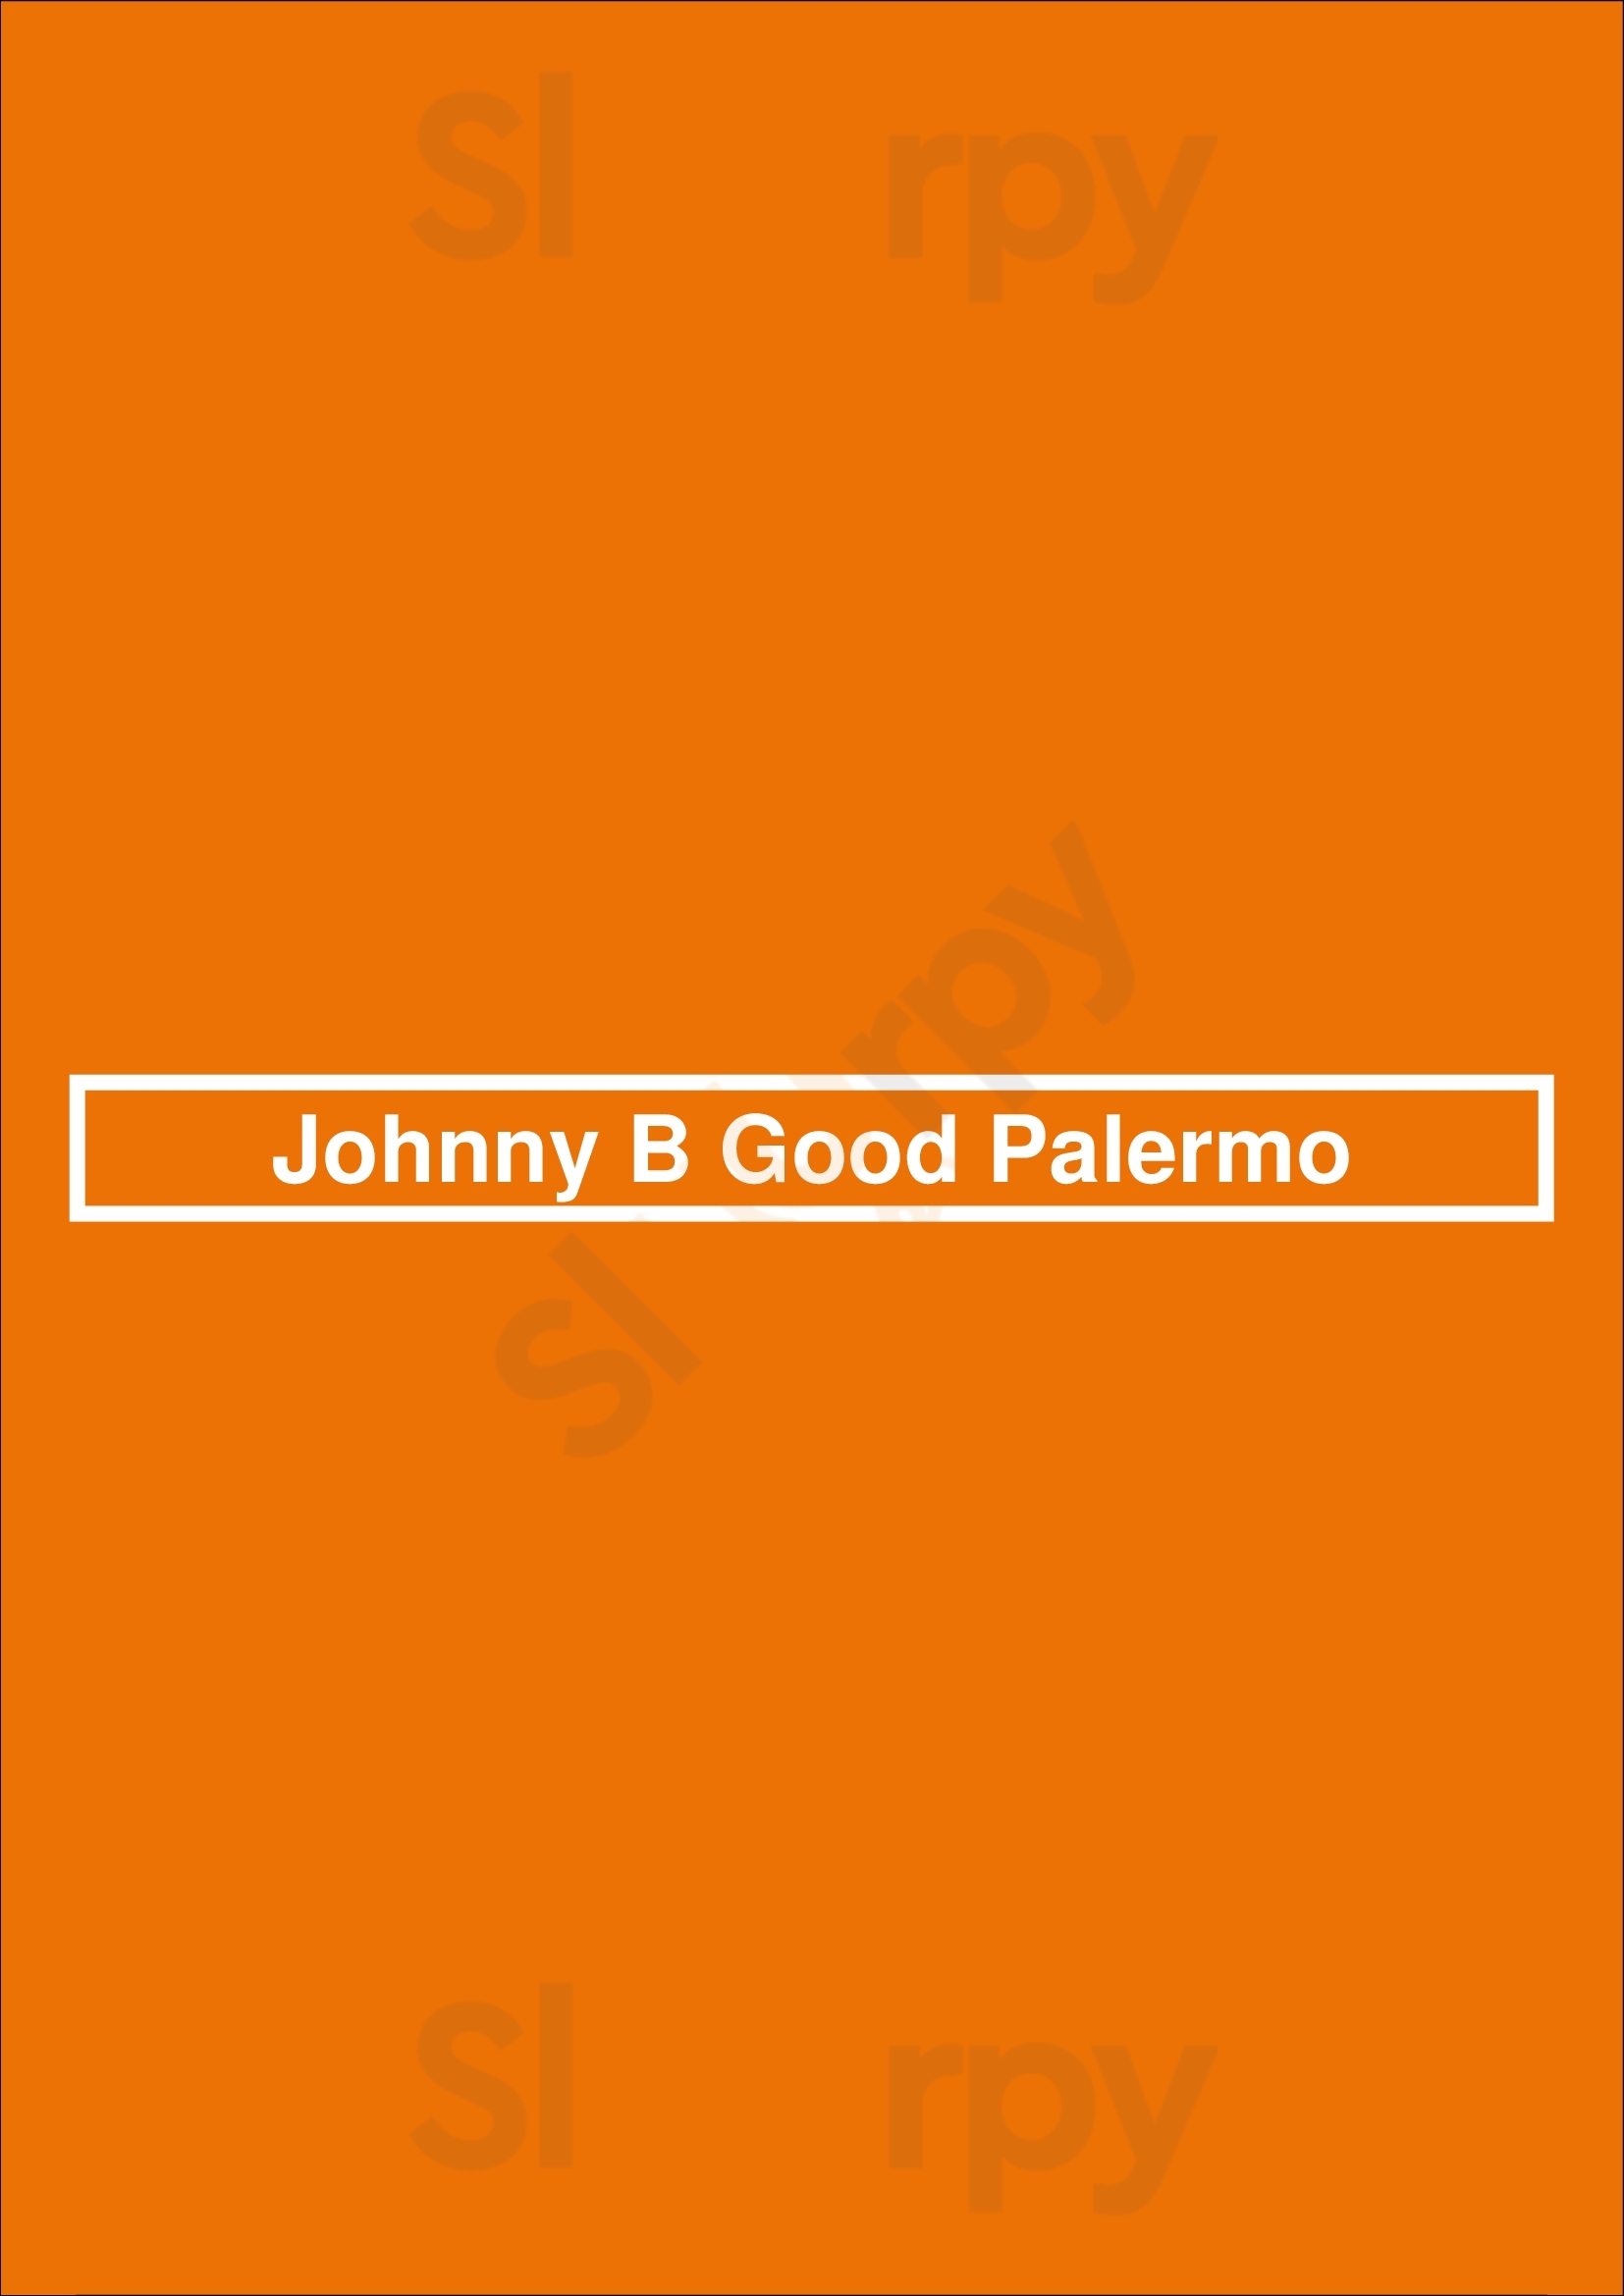 Johnny B Good Palermo Buenos Aires Menu - 1